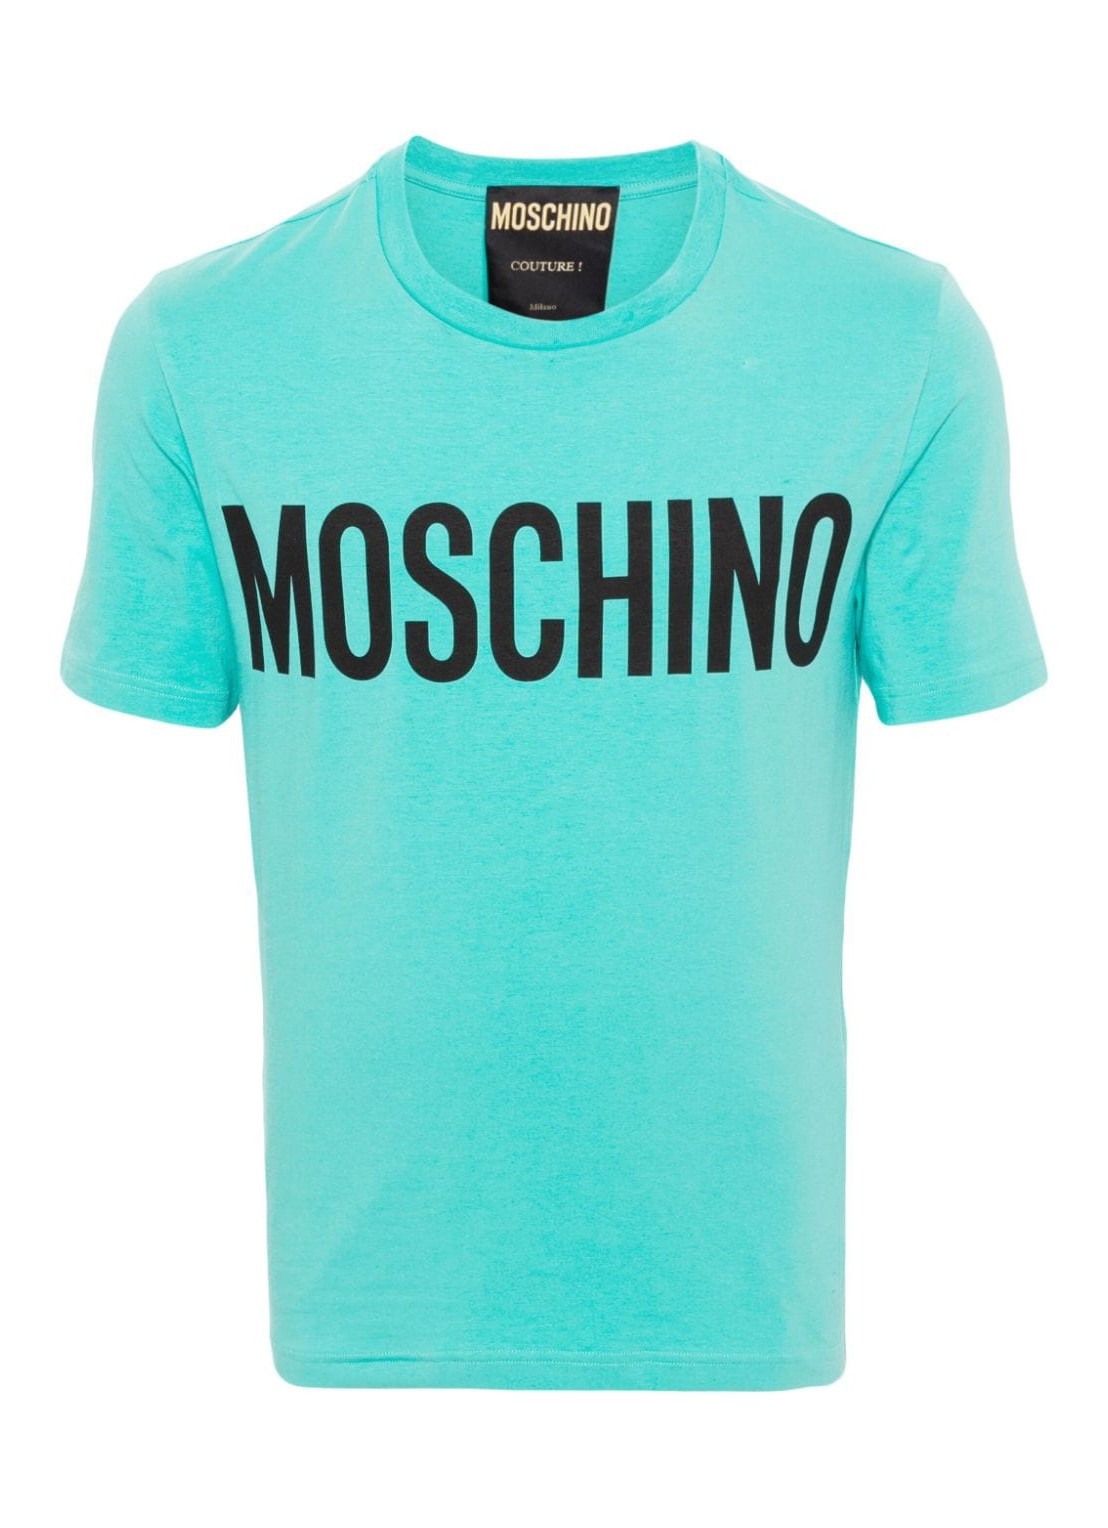 Camiseta moschino couture t-shirt man stretch cotton jersey 07022039 a1365 talla 50
 